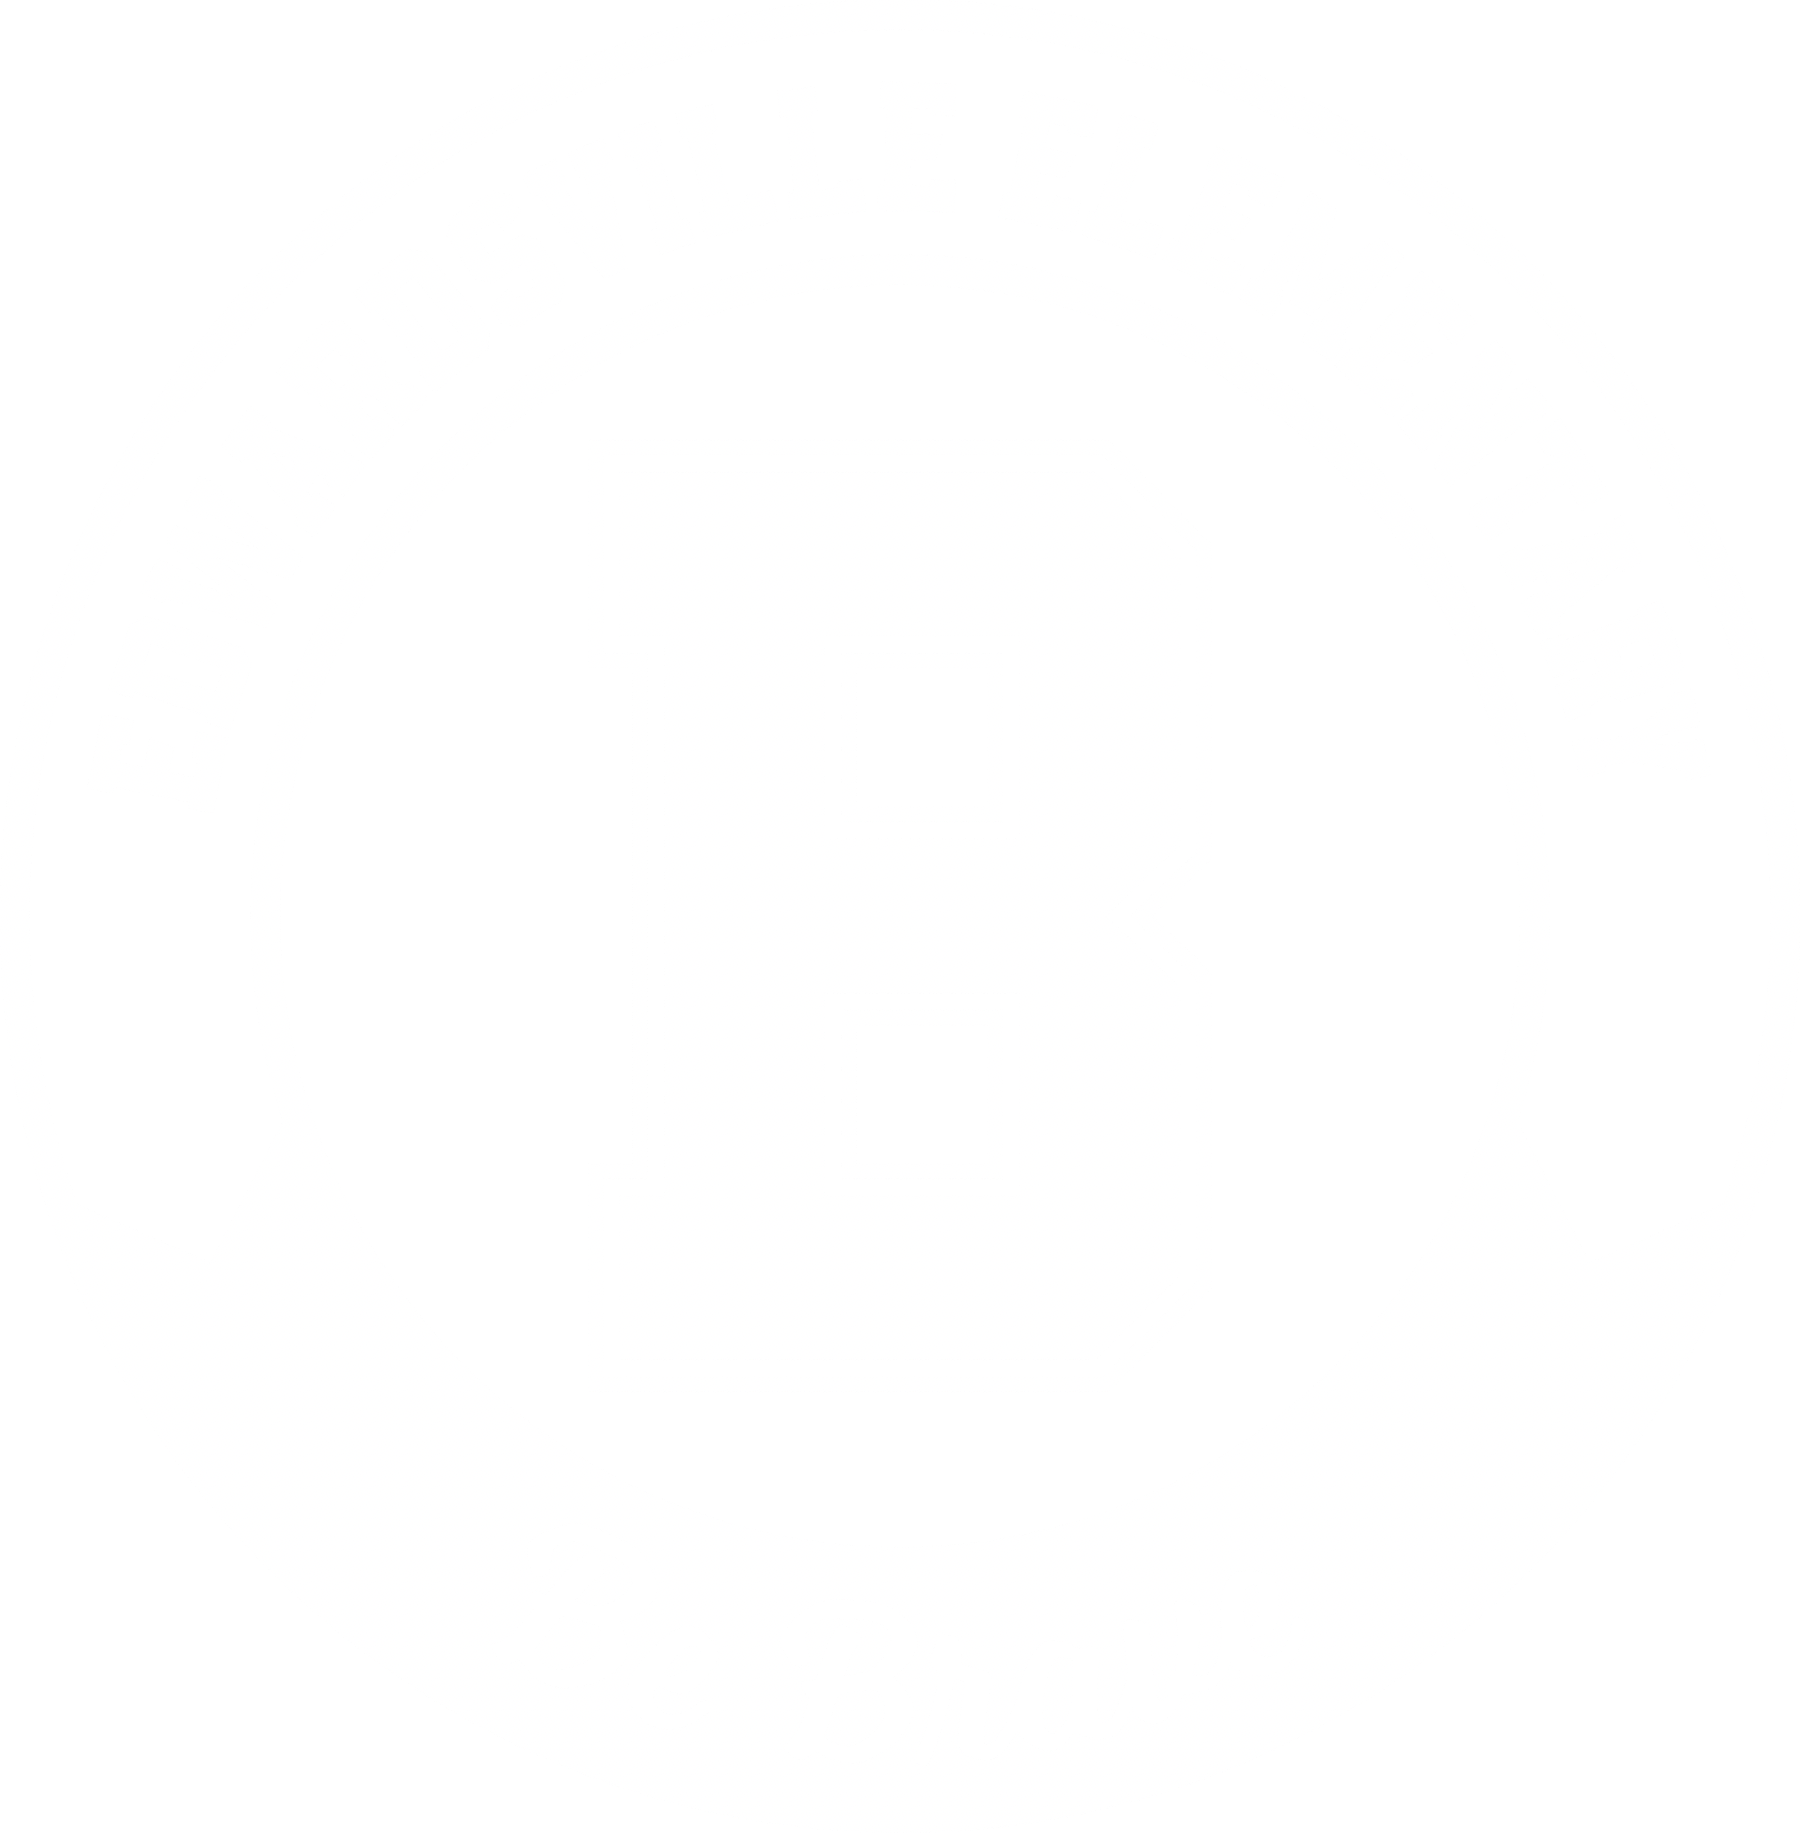 edwardsville elementary school logo